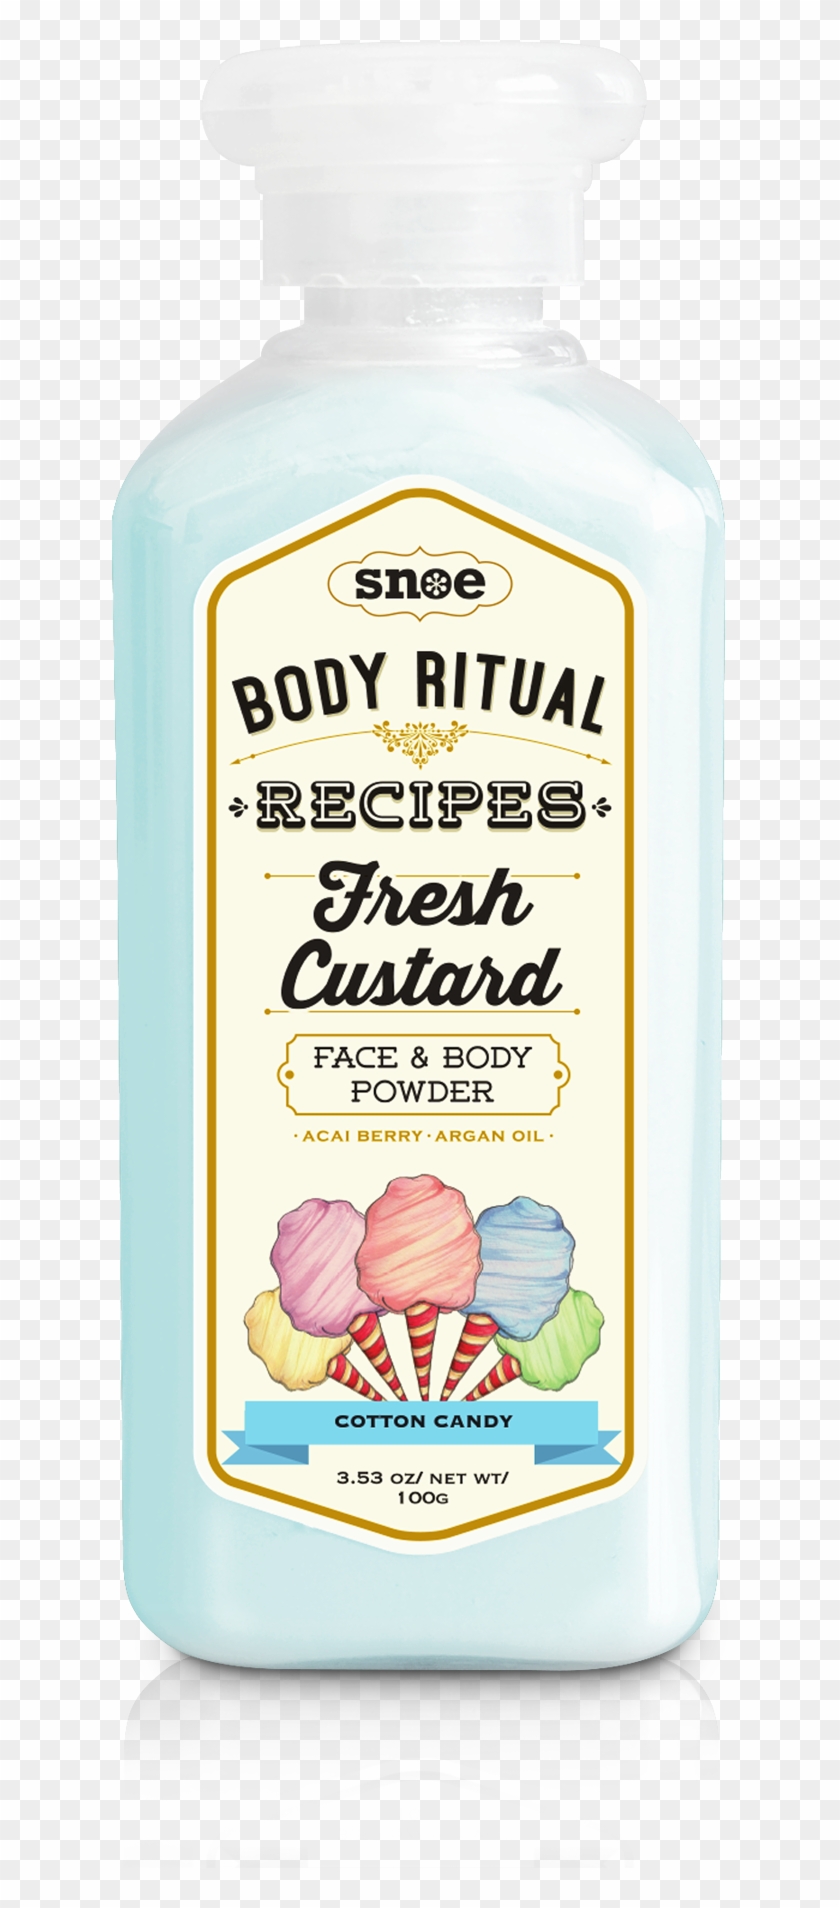 Body Ritual Recipes Fresh Custard Powder In Cotton - Ouidad Hair Products Clipart #4121933